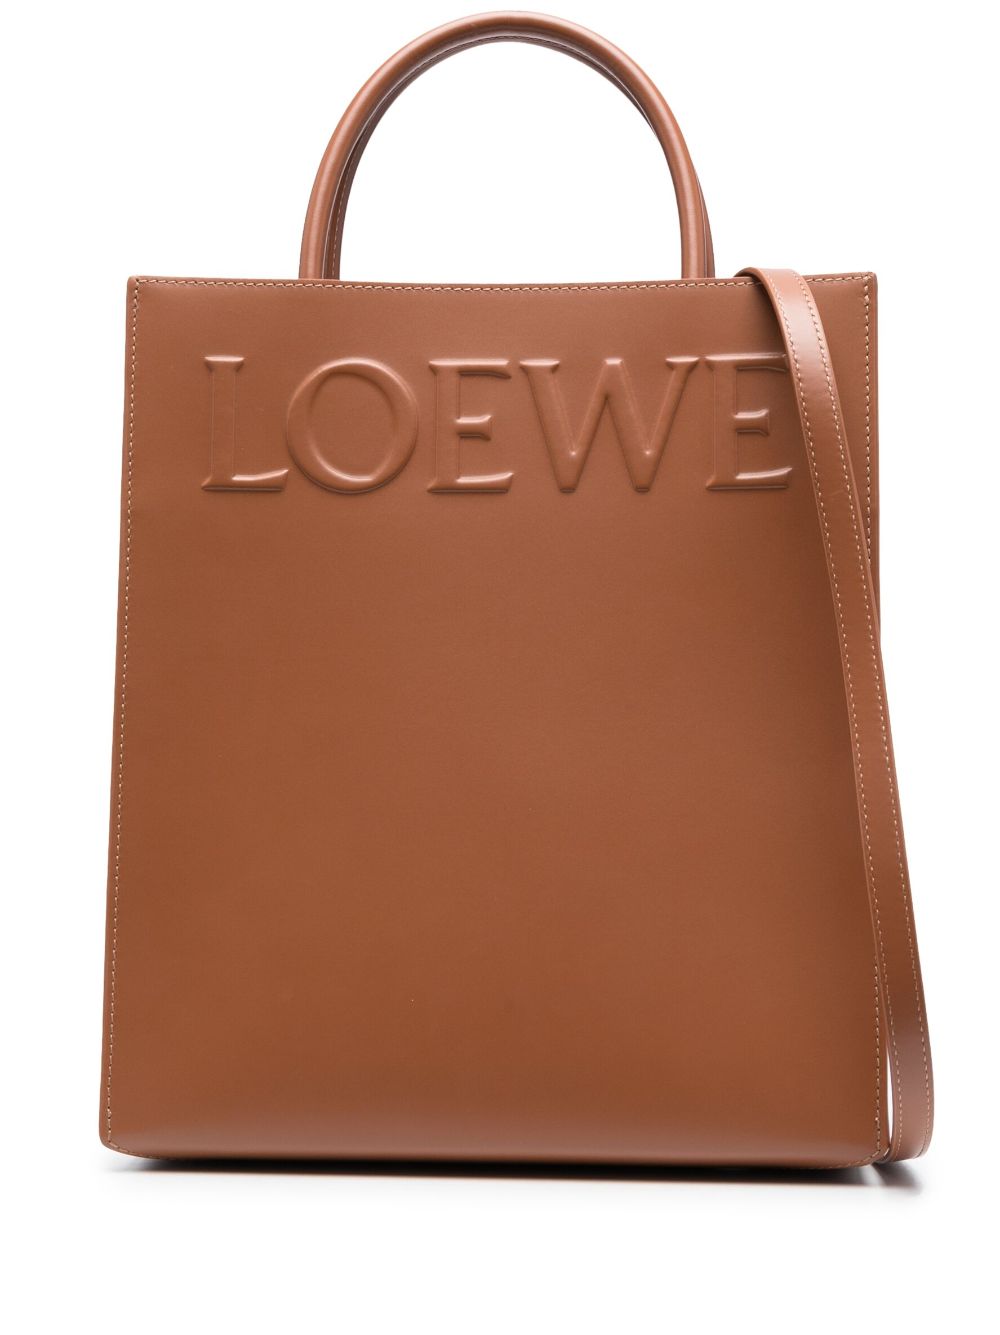 LOEWE- Standard A4 Leather Tote Bag